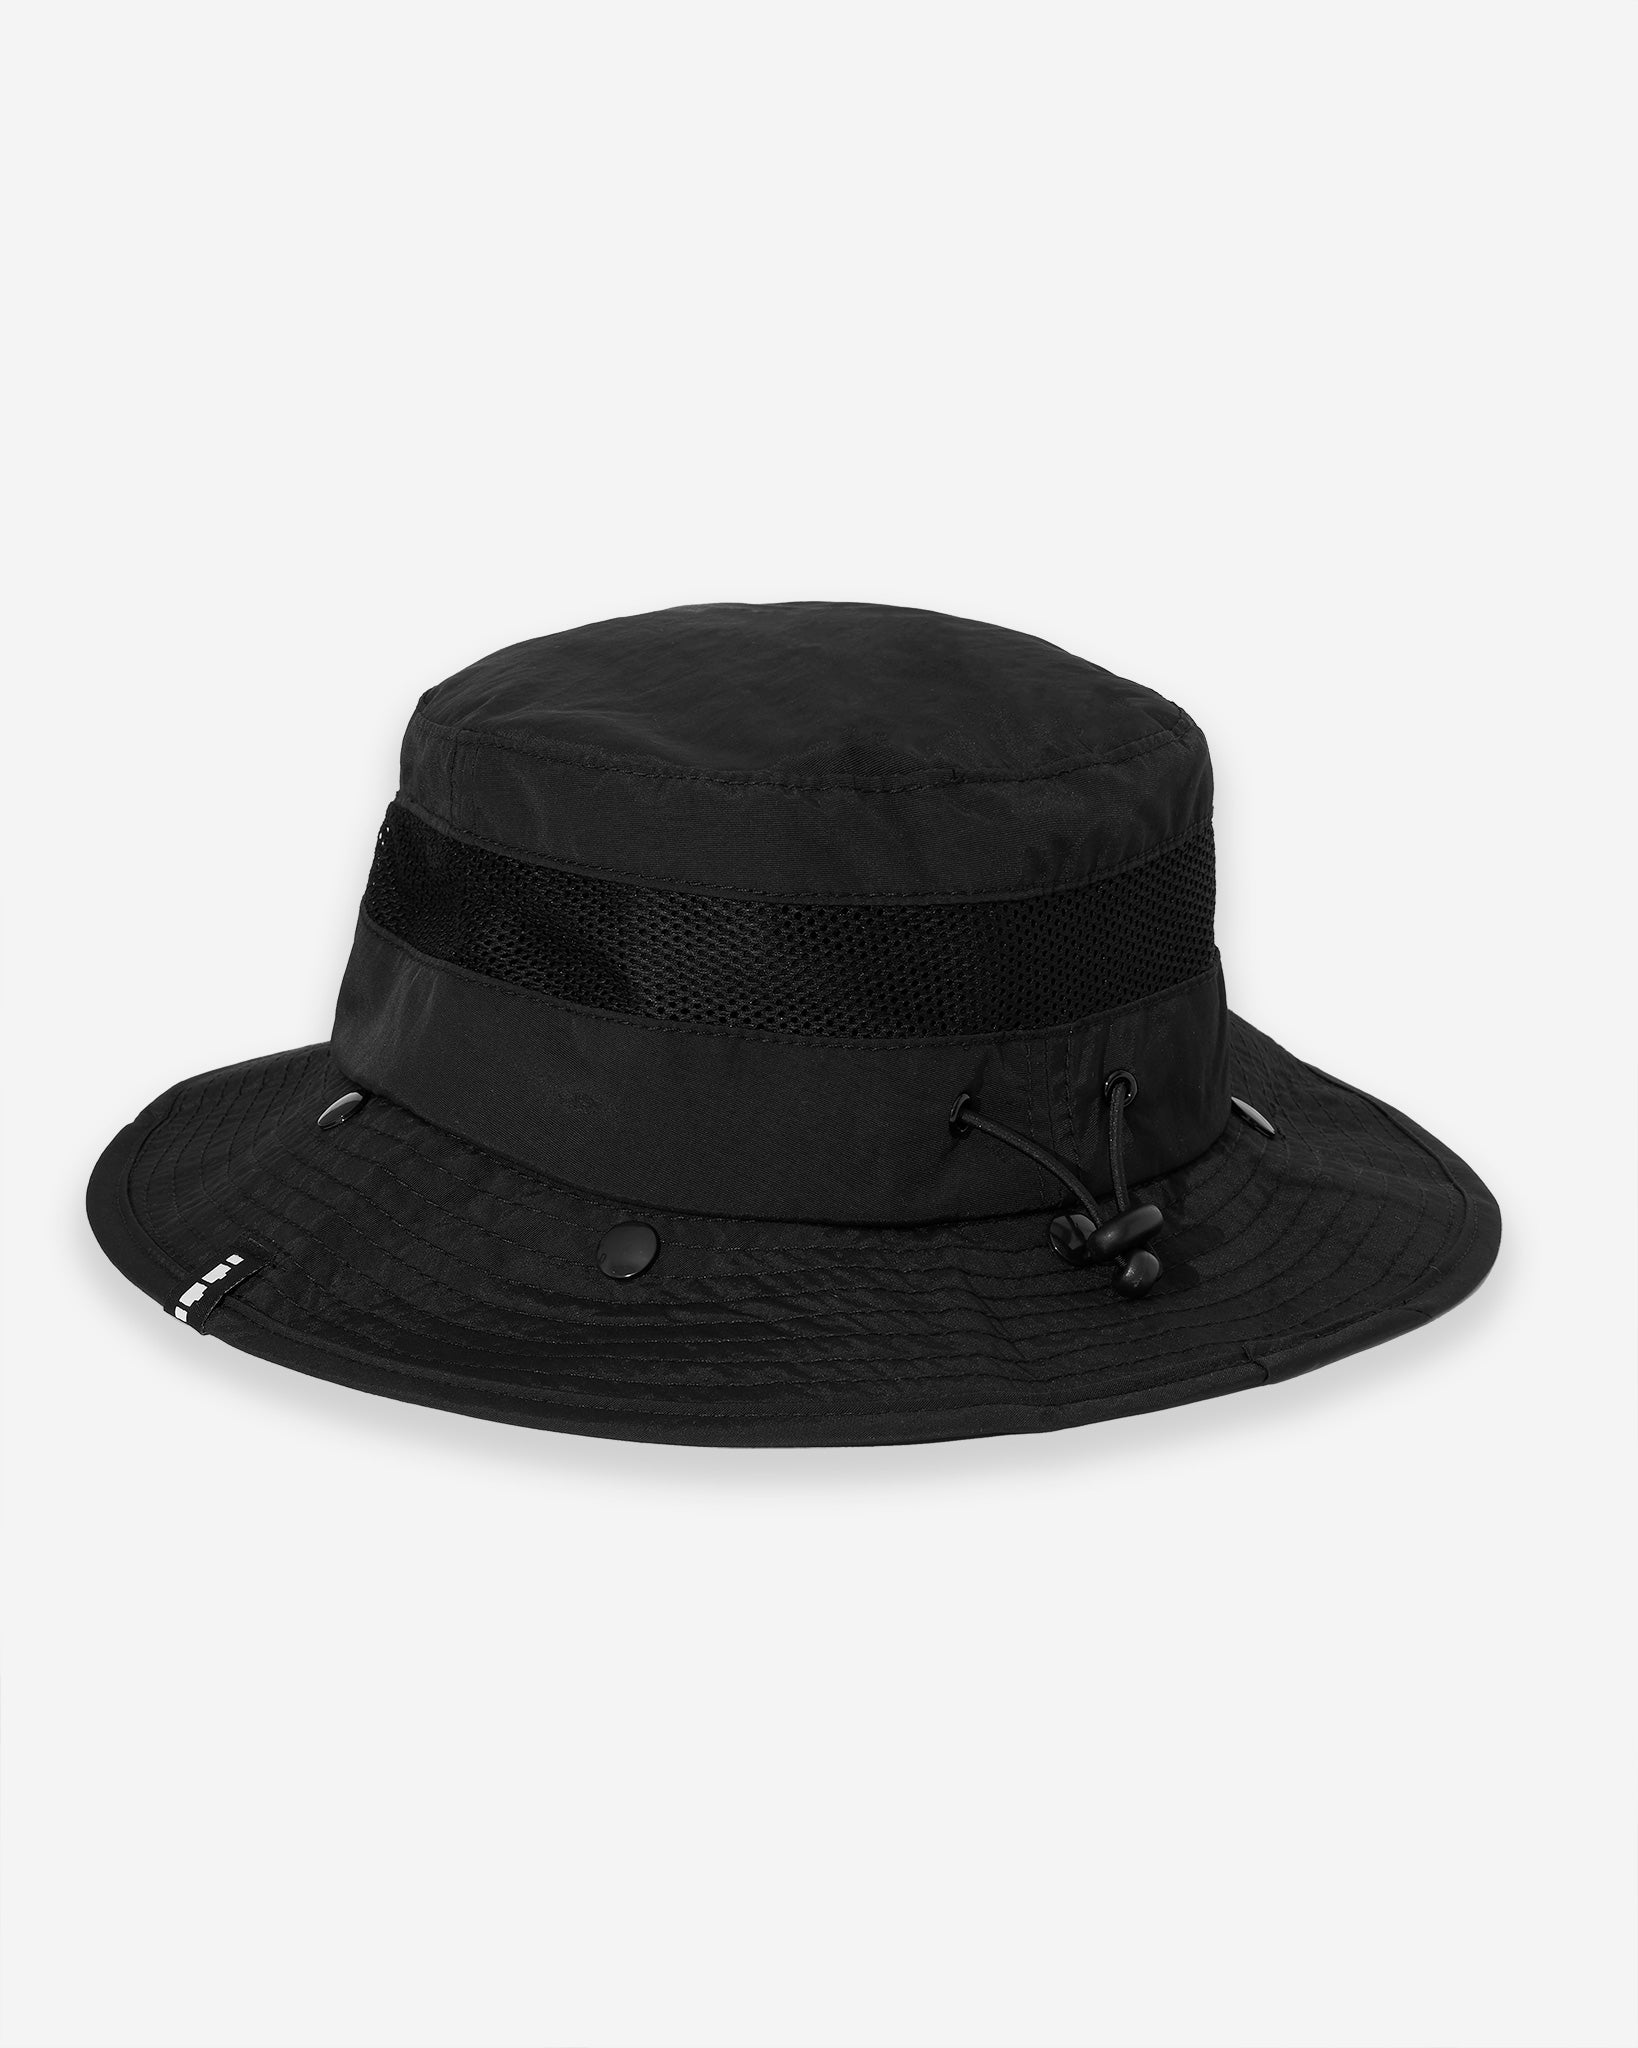 TTT Beach Bucket Hat - Black – Rhythmic Tones